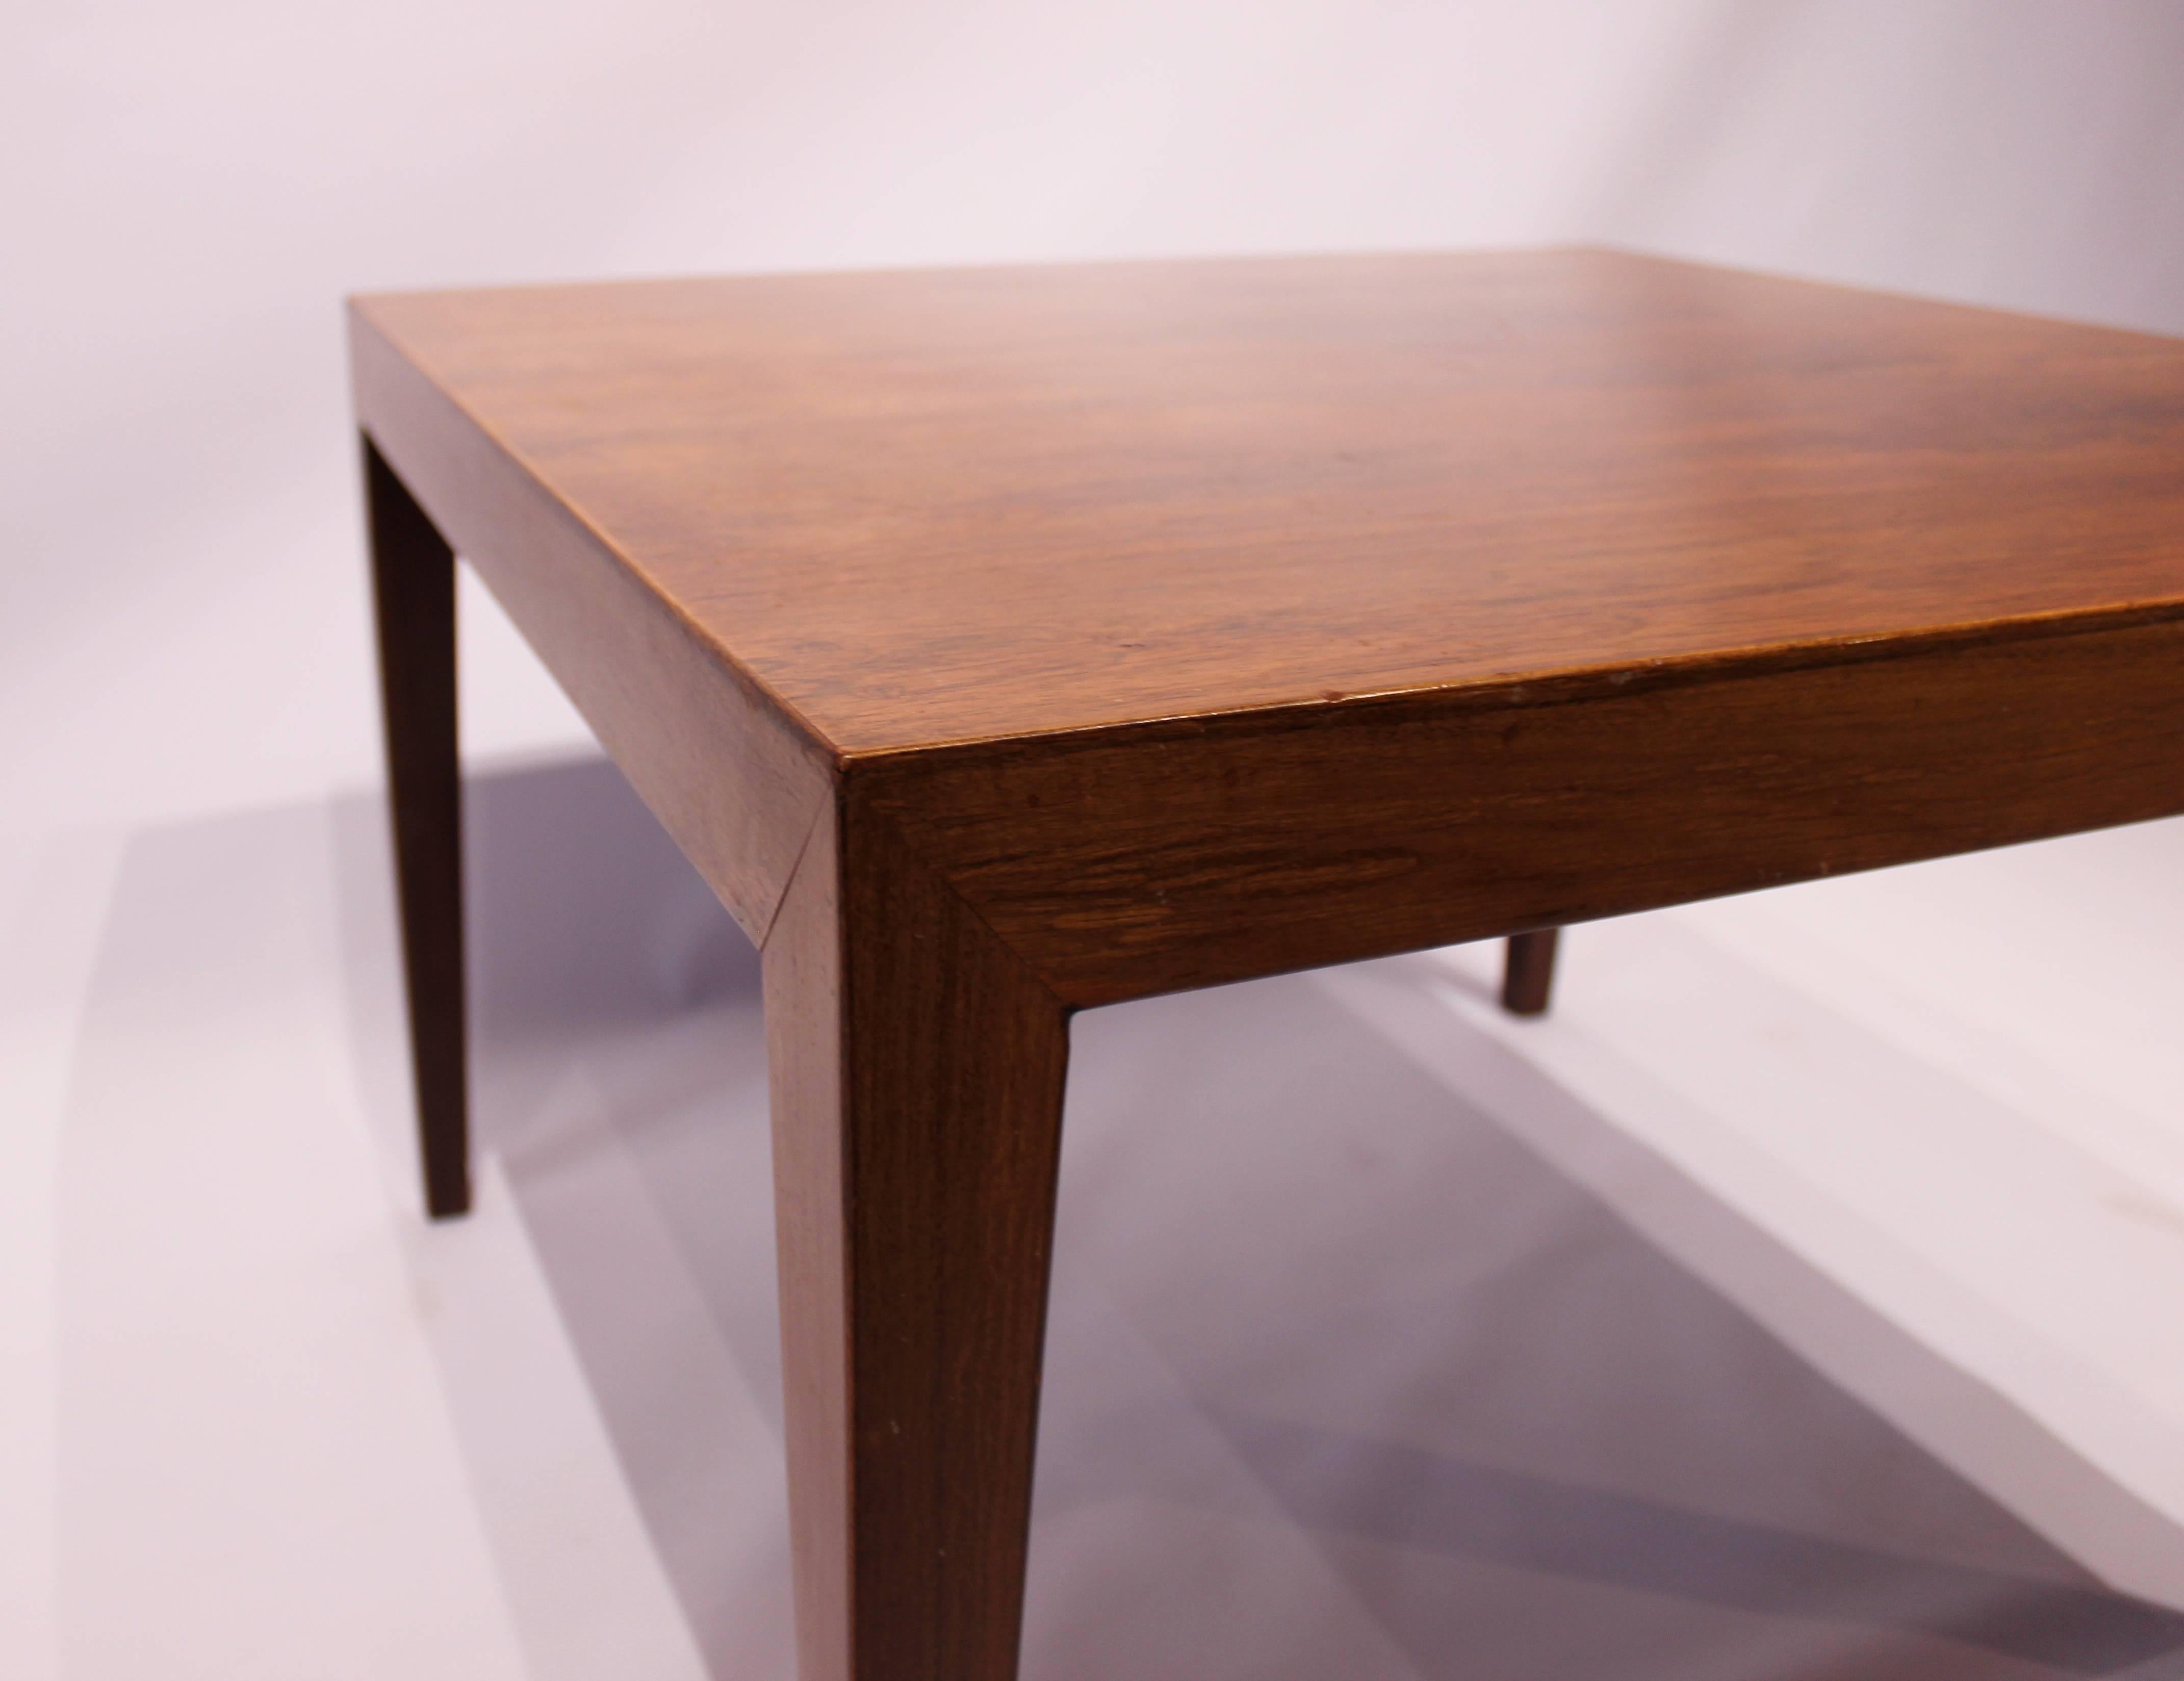 Scandinavian Modern Coffee/Side Table in Dark Wood by Severin Hansen and Haslev, 1960s For Sale